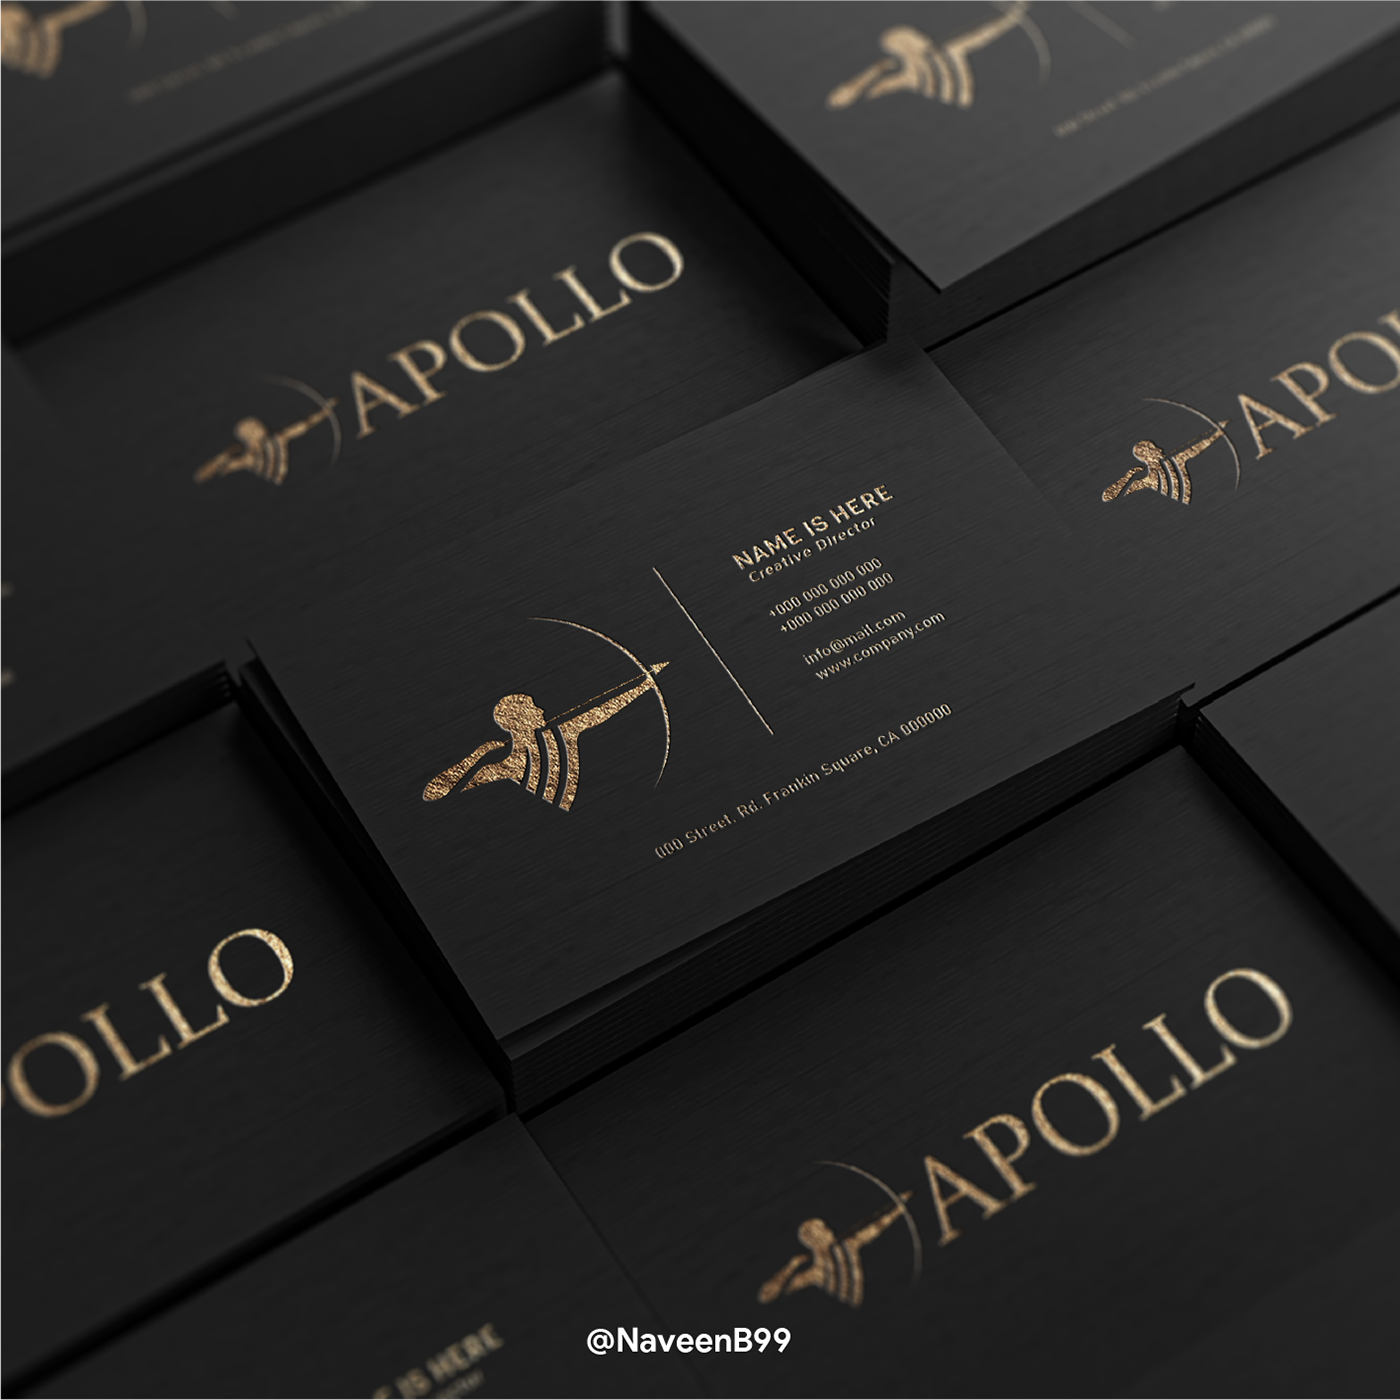 Apollo bag branding  cloth design designing fashion brand fashionable greek logo